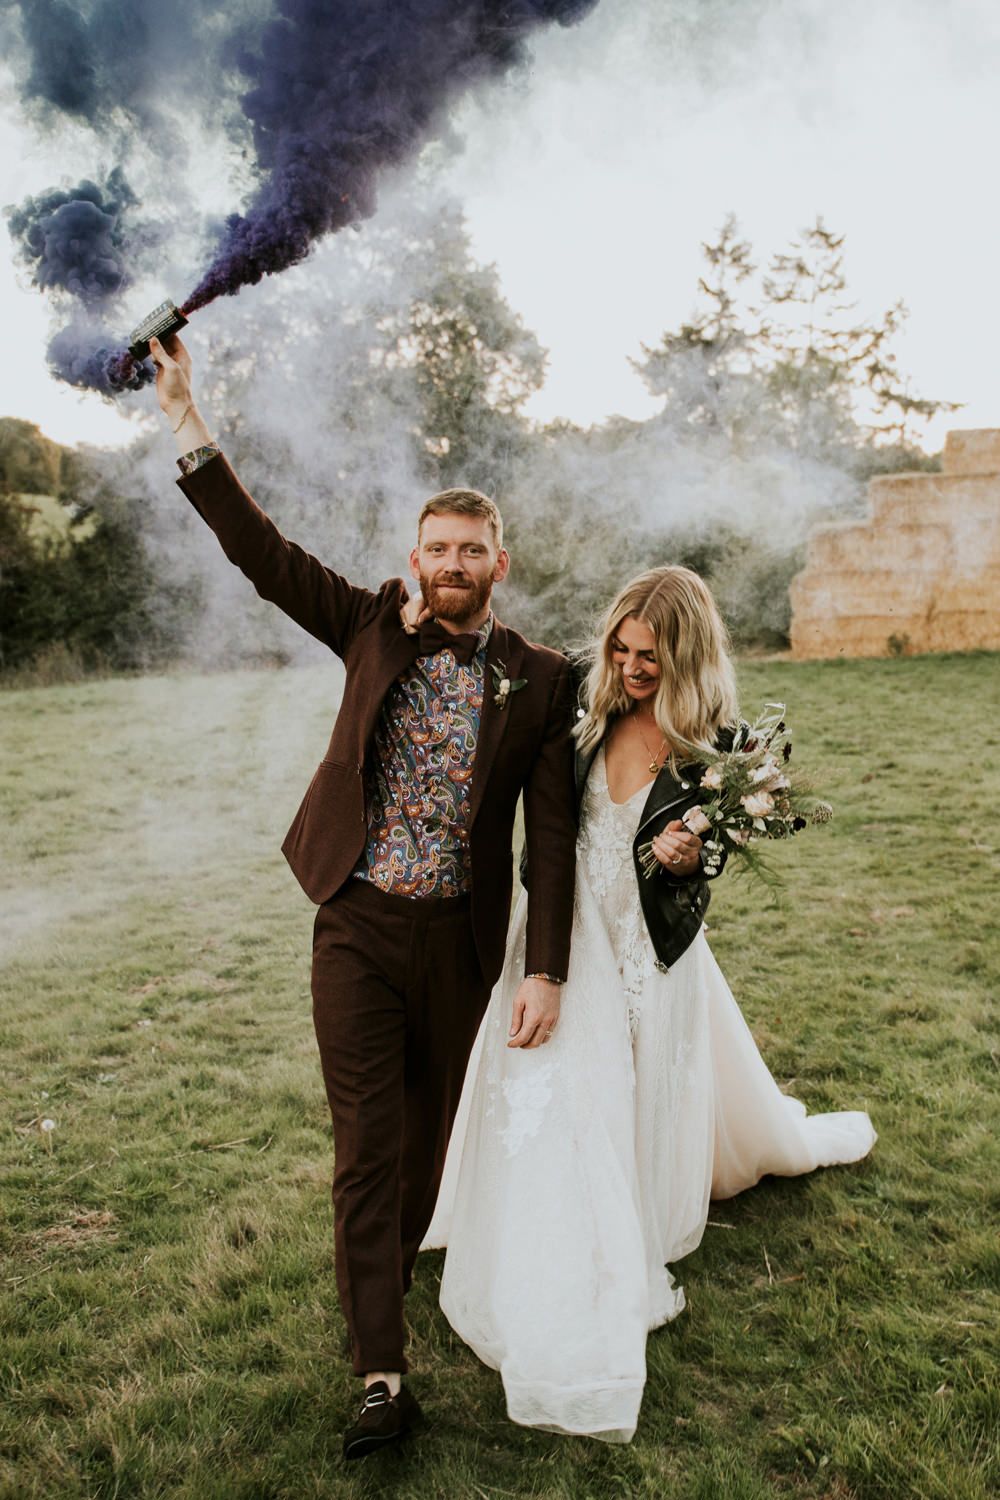 Smoke Bomb Wedding Photos - Rock My Wedding